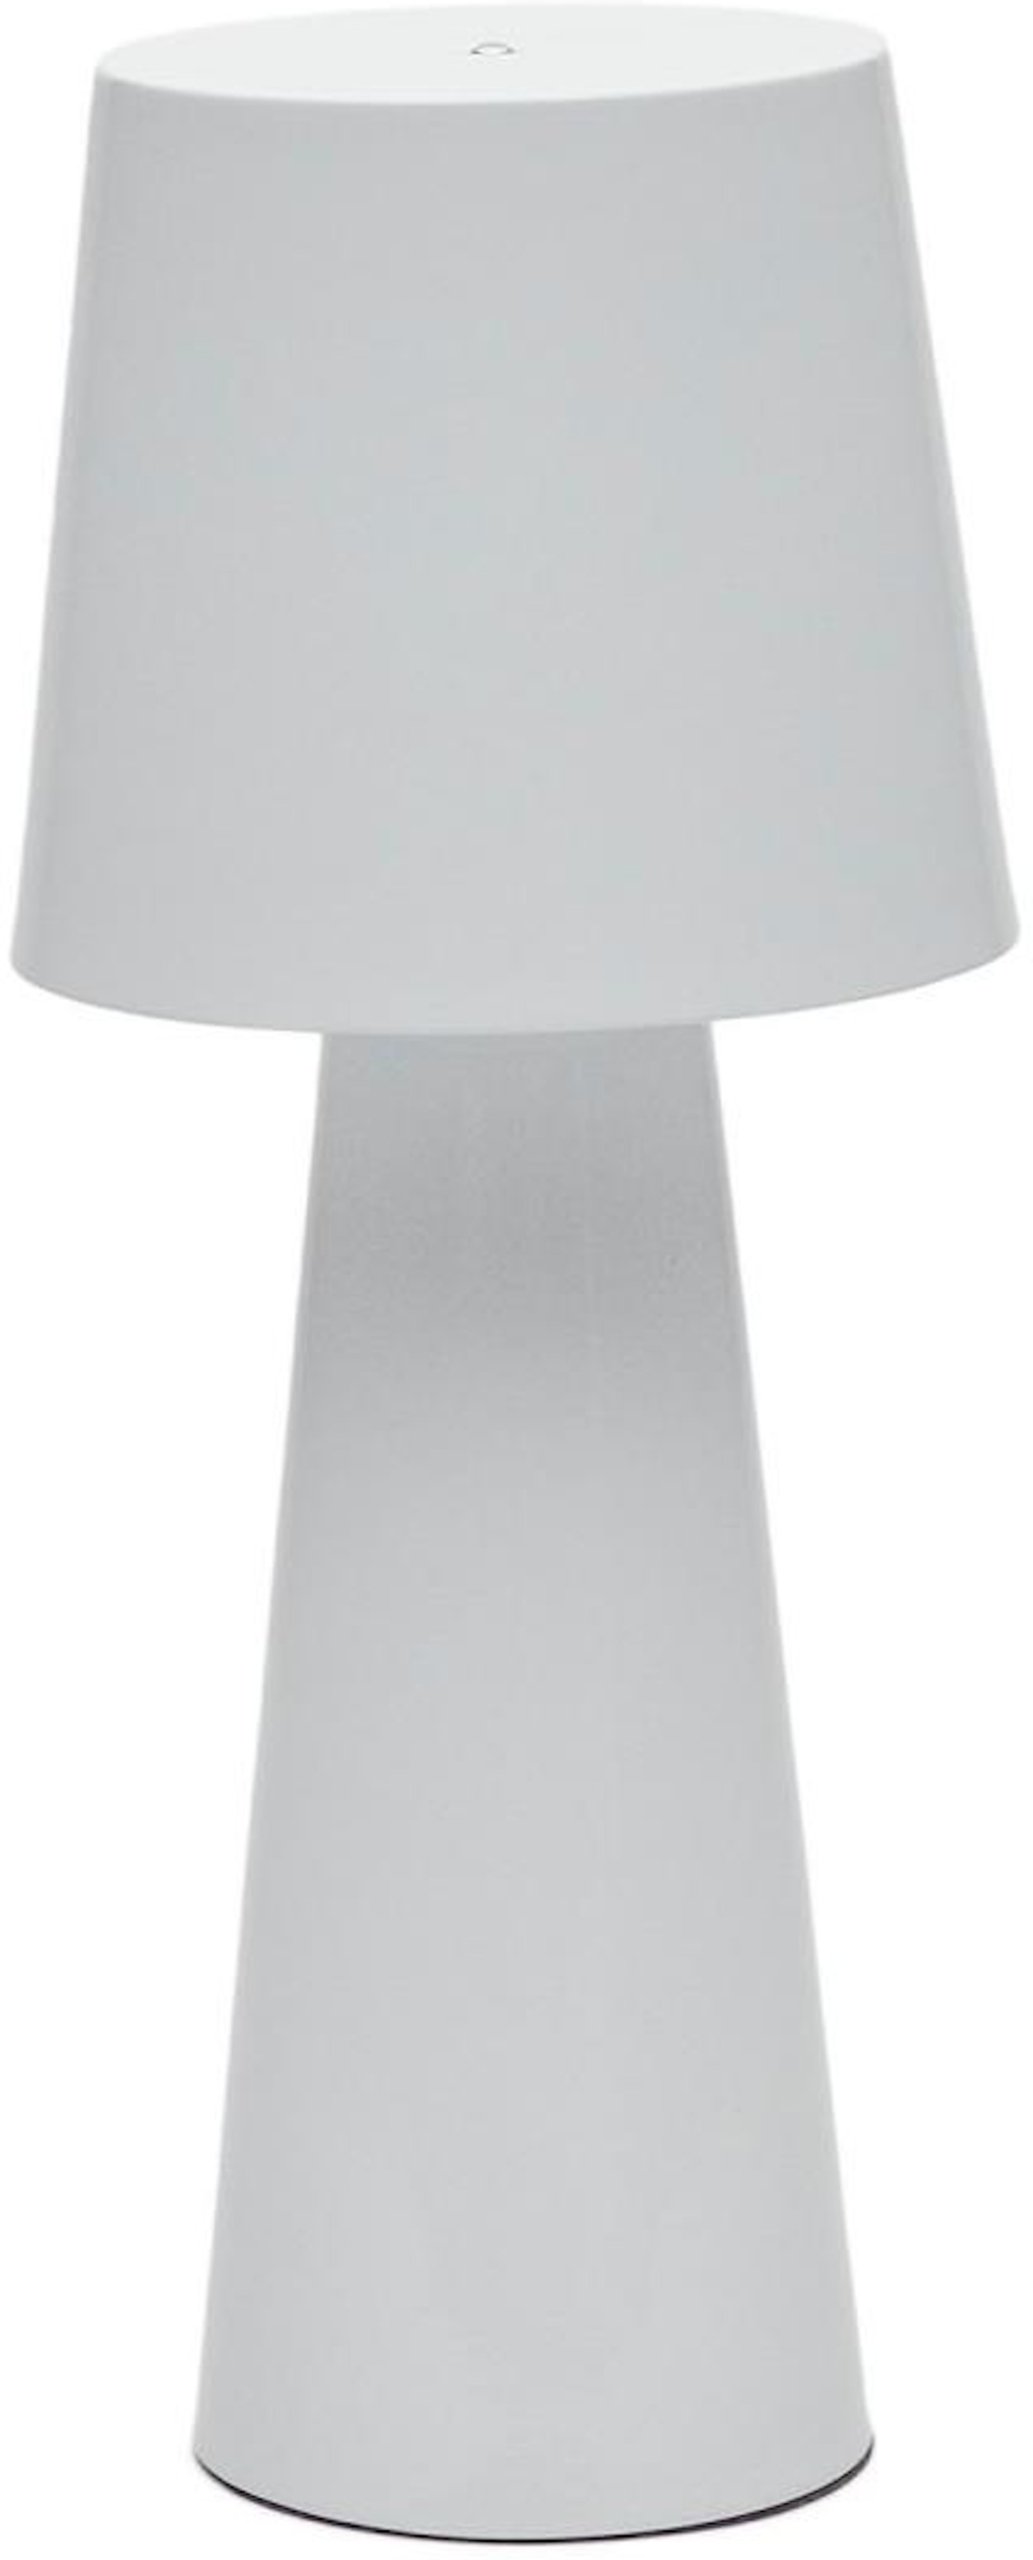 LAFORMA Arenys stor bordlampe med hvidmalet finish